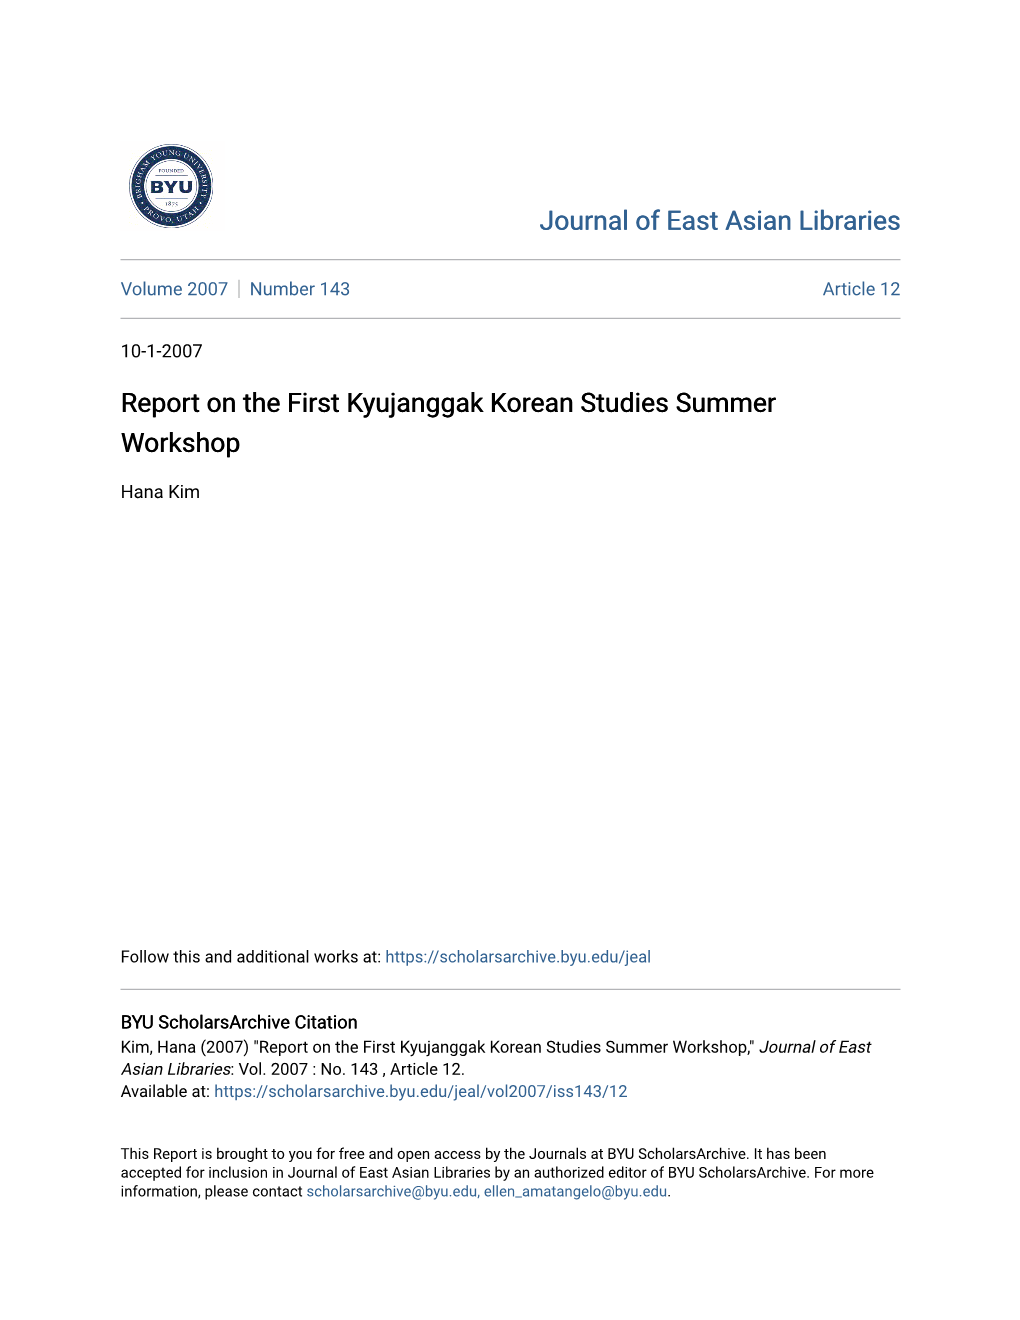 Report on the First Kyujanggak Korean Studies Summer Workshop